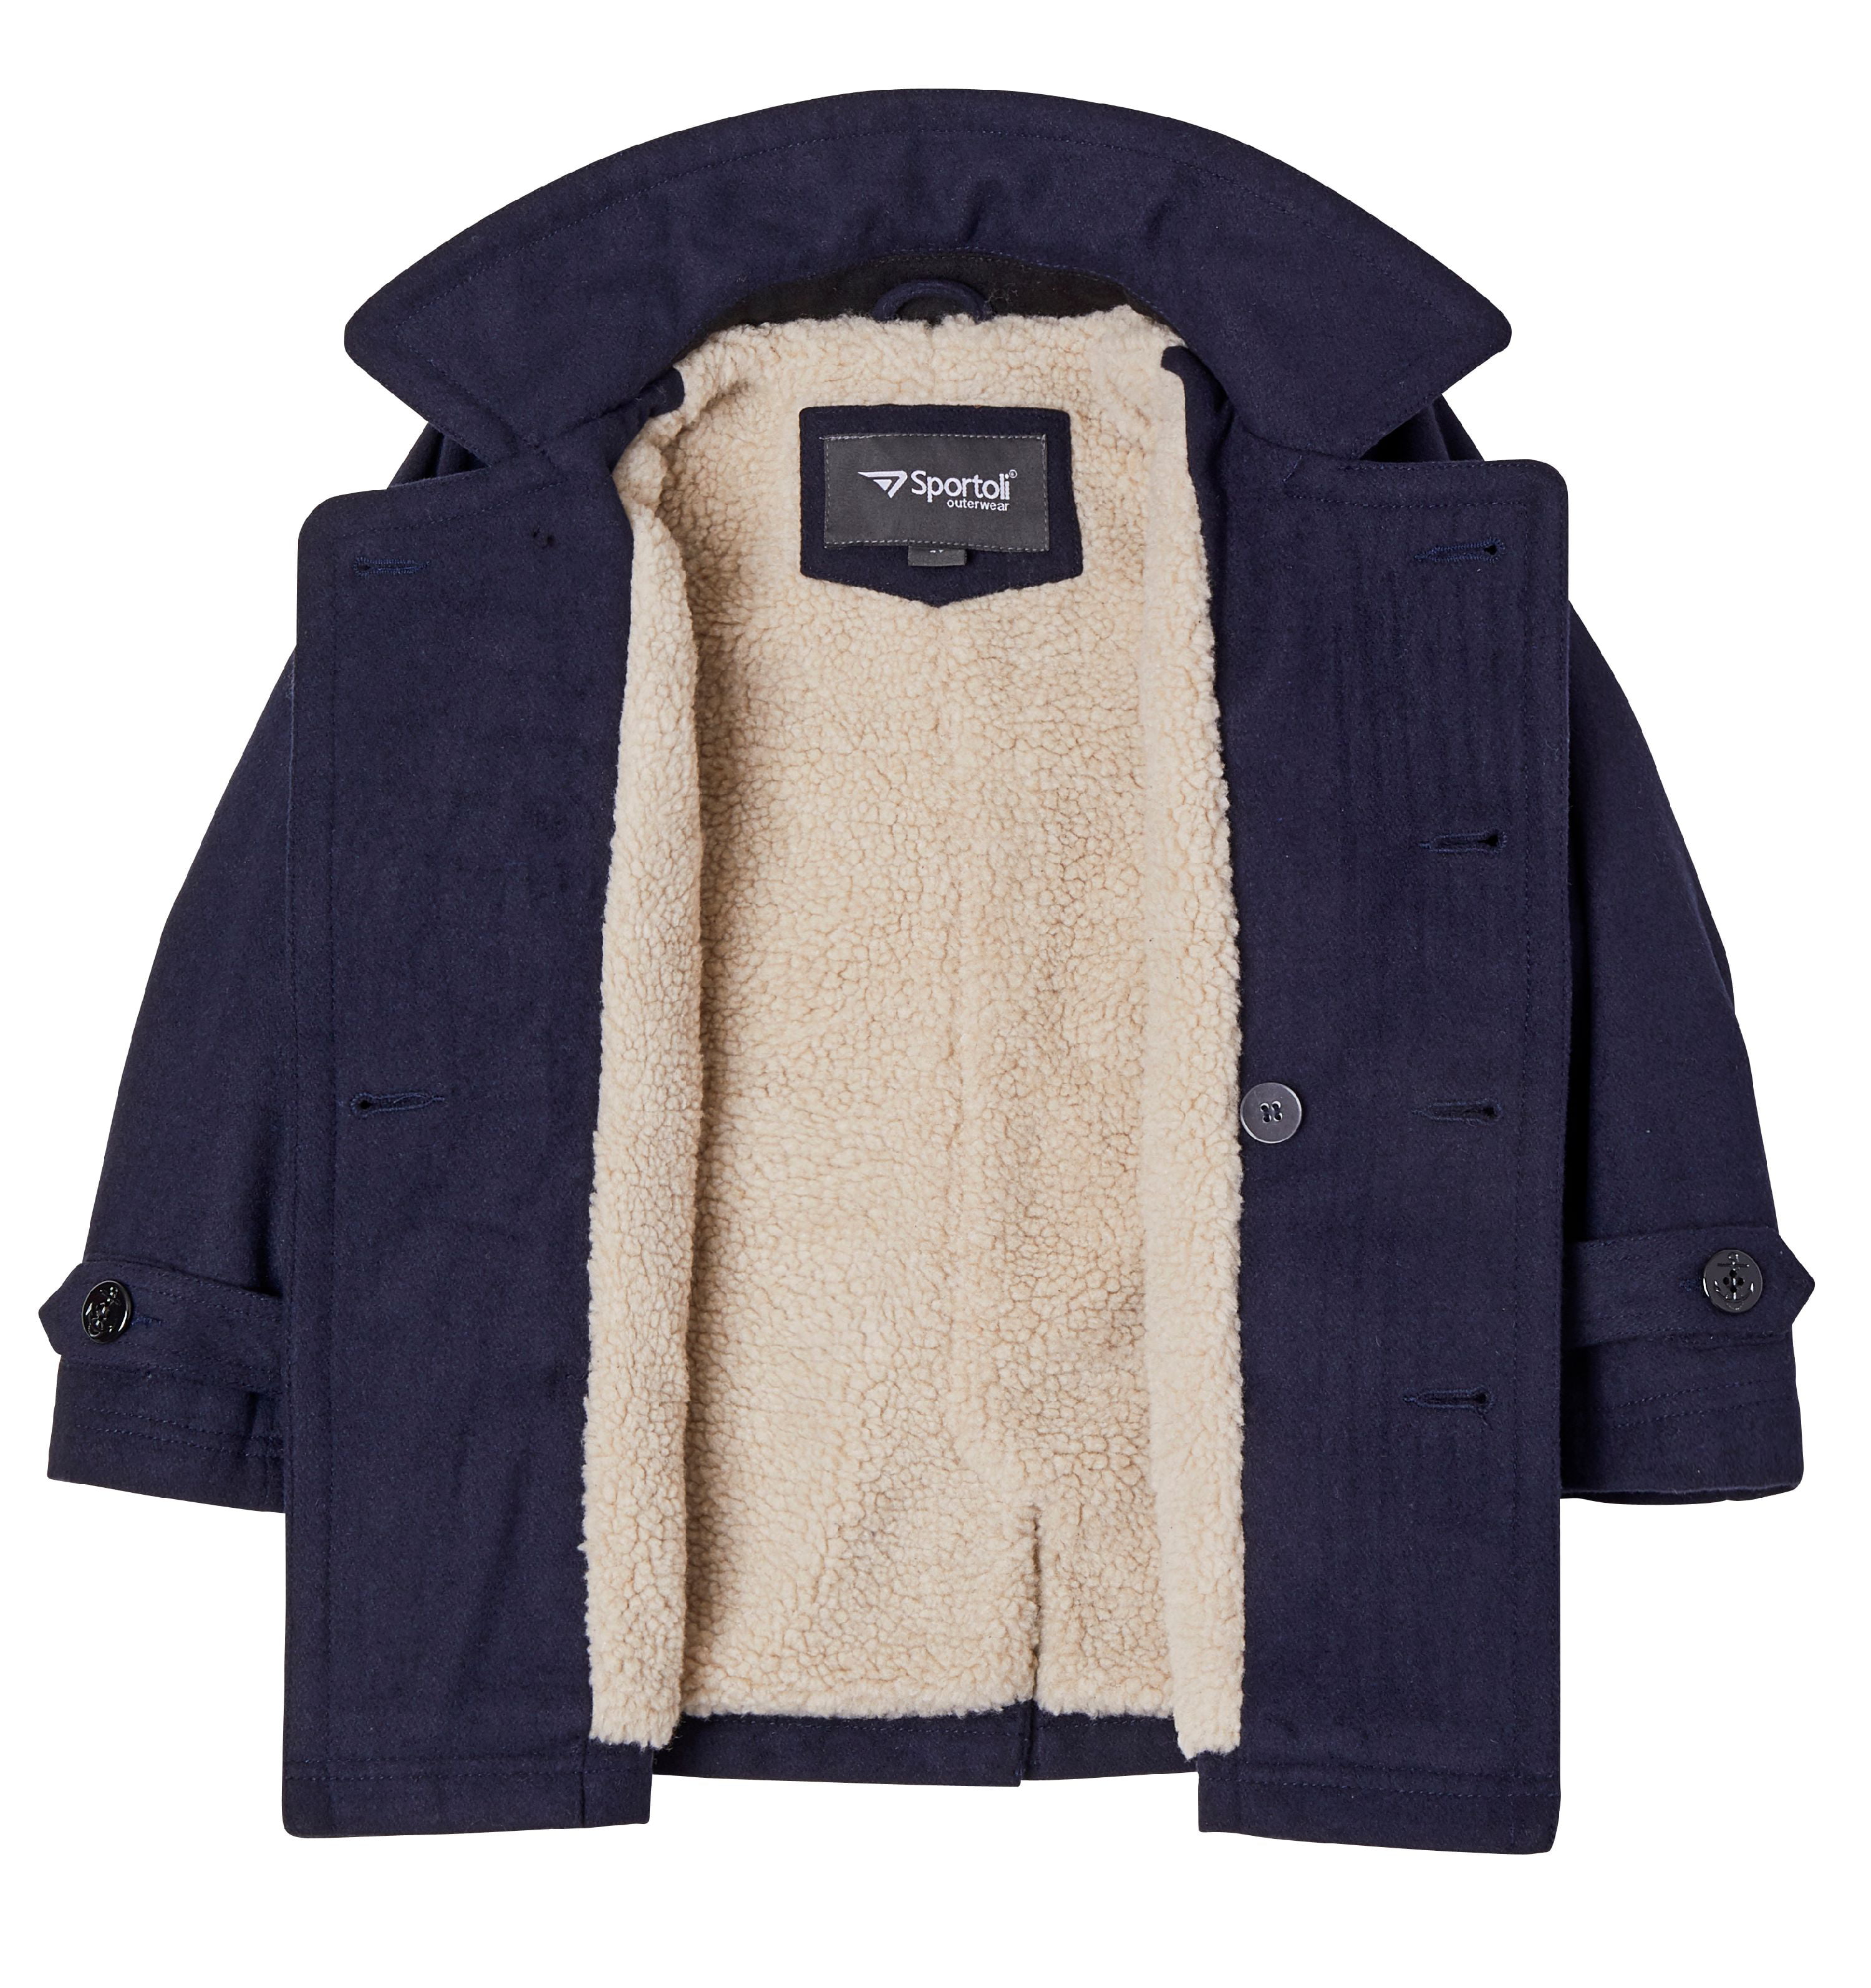 Sportoli Boys/’ Classic Wool Blend Military Winter Dress Pea Coat Peacoat Jacket